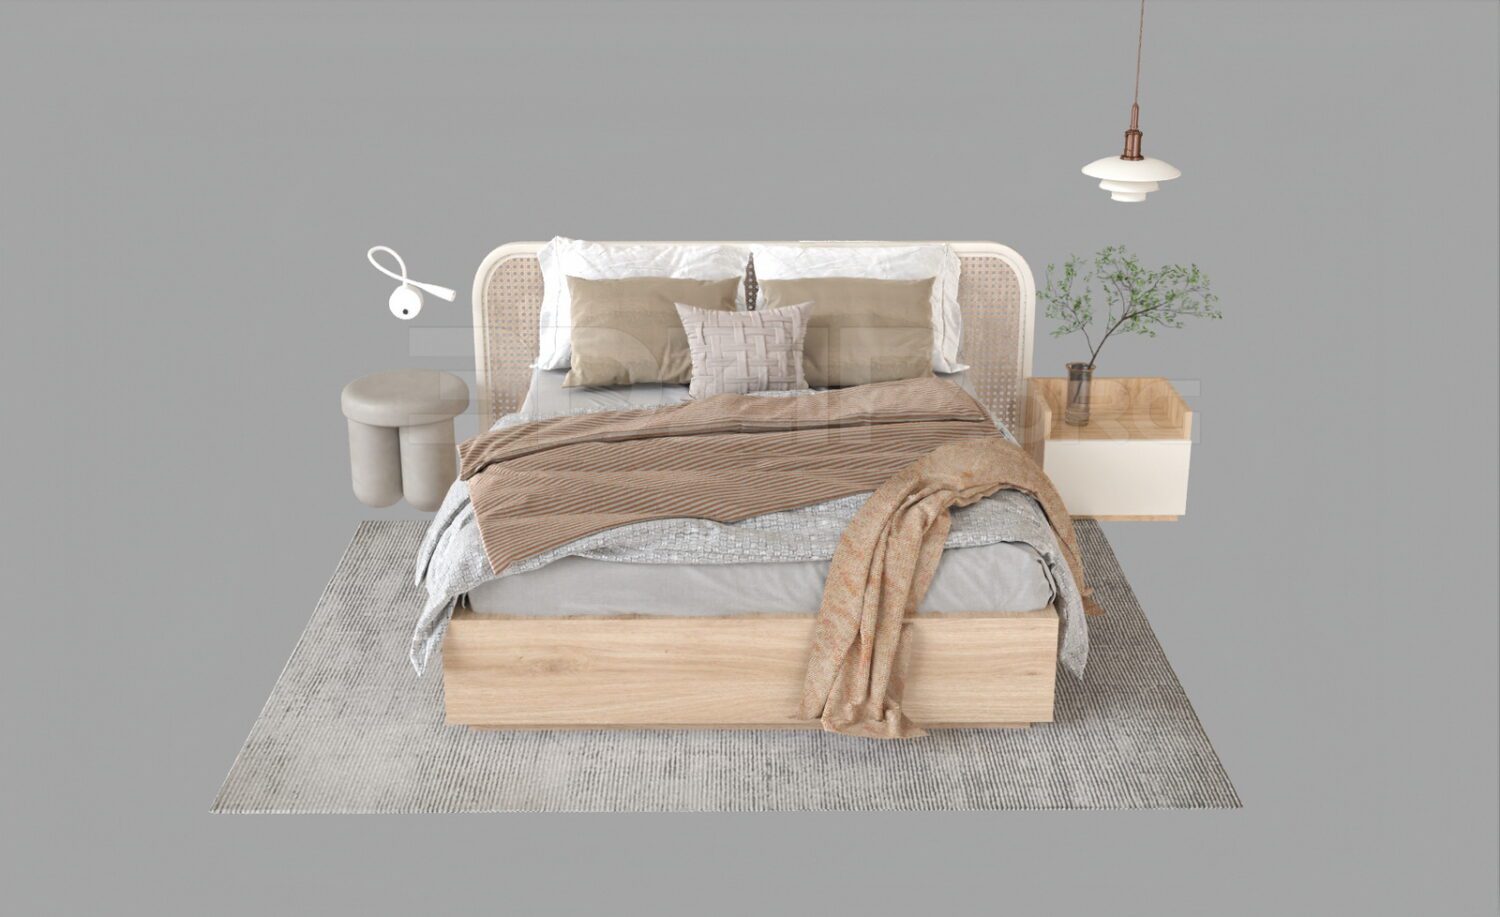 4417. Free 3D Bed Model Download